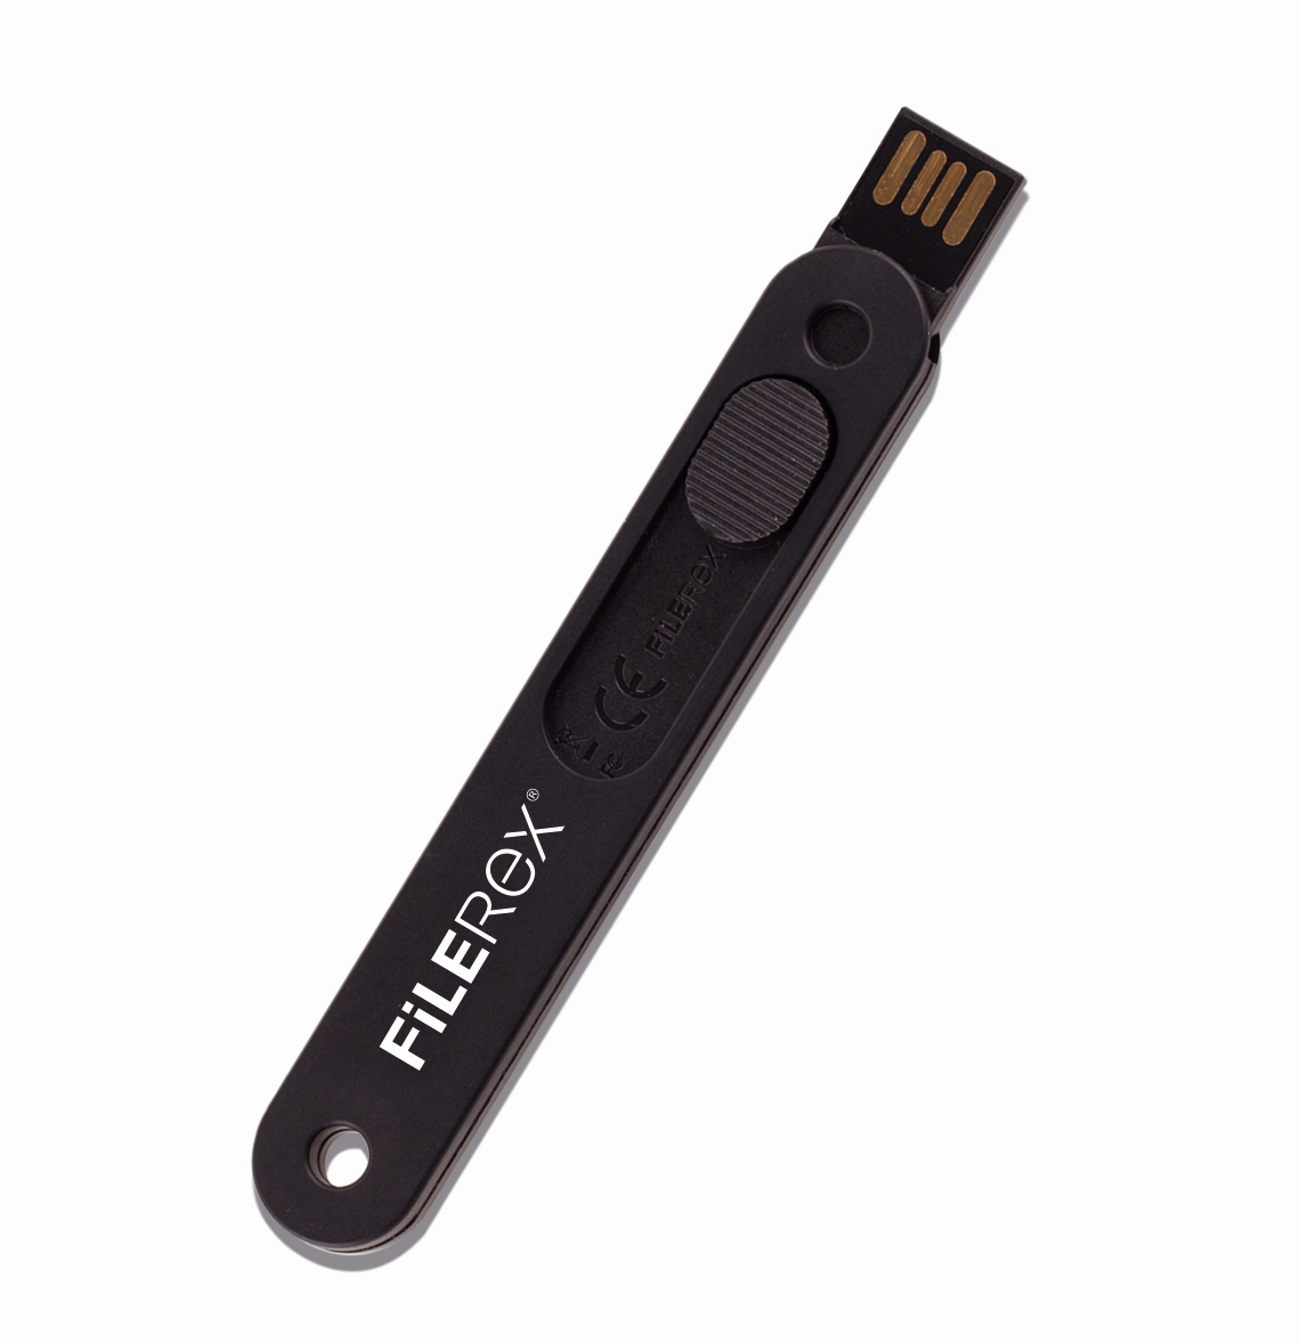 FILEREX 8GB - Original FiLEREX BlackE 8 GB) / 2.0 Black, - USB-Stick (Black) (Black #GEN2